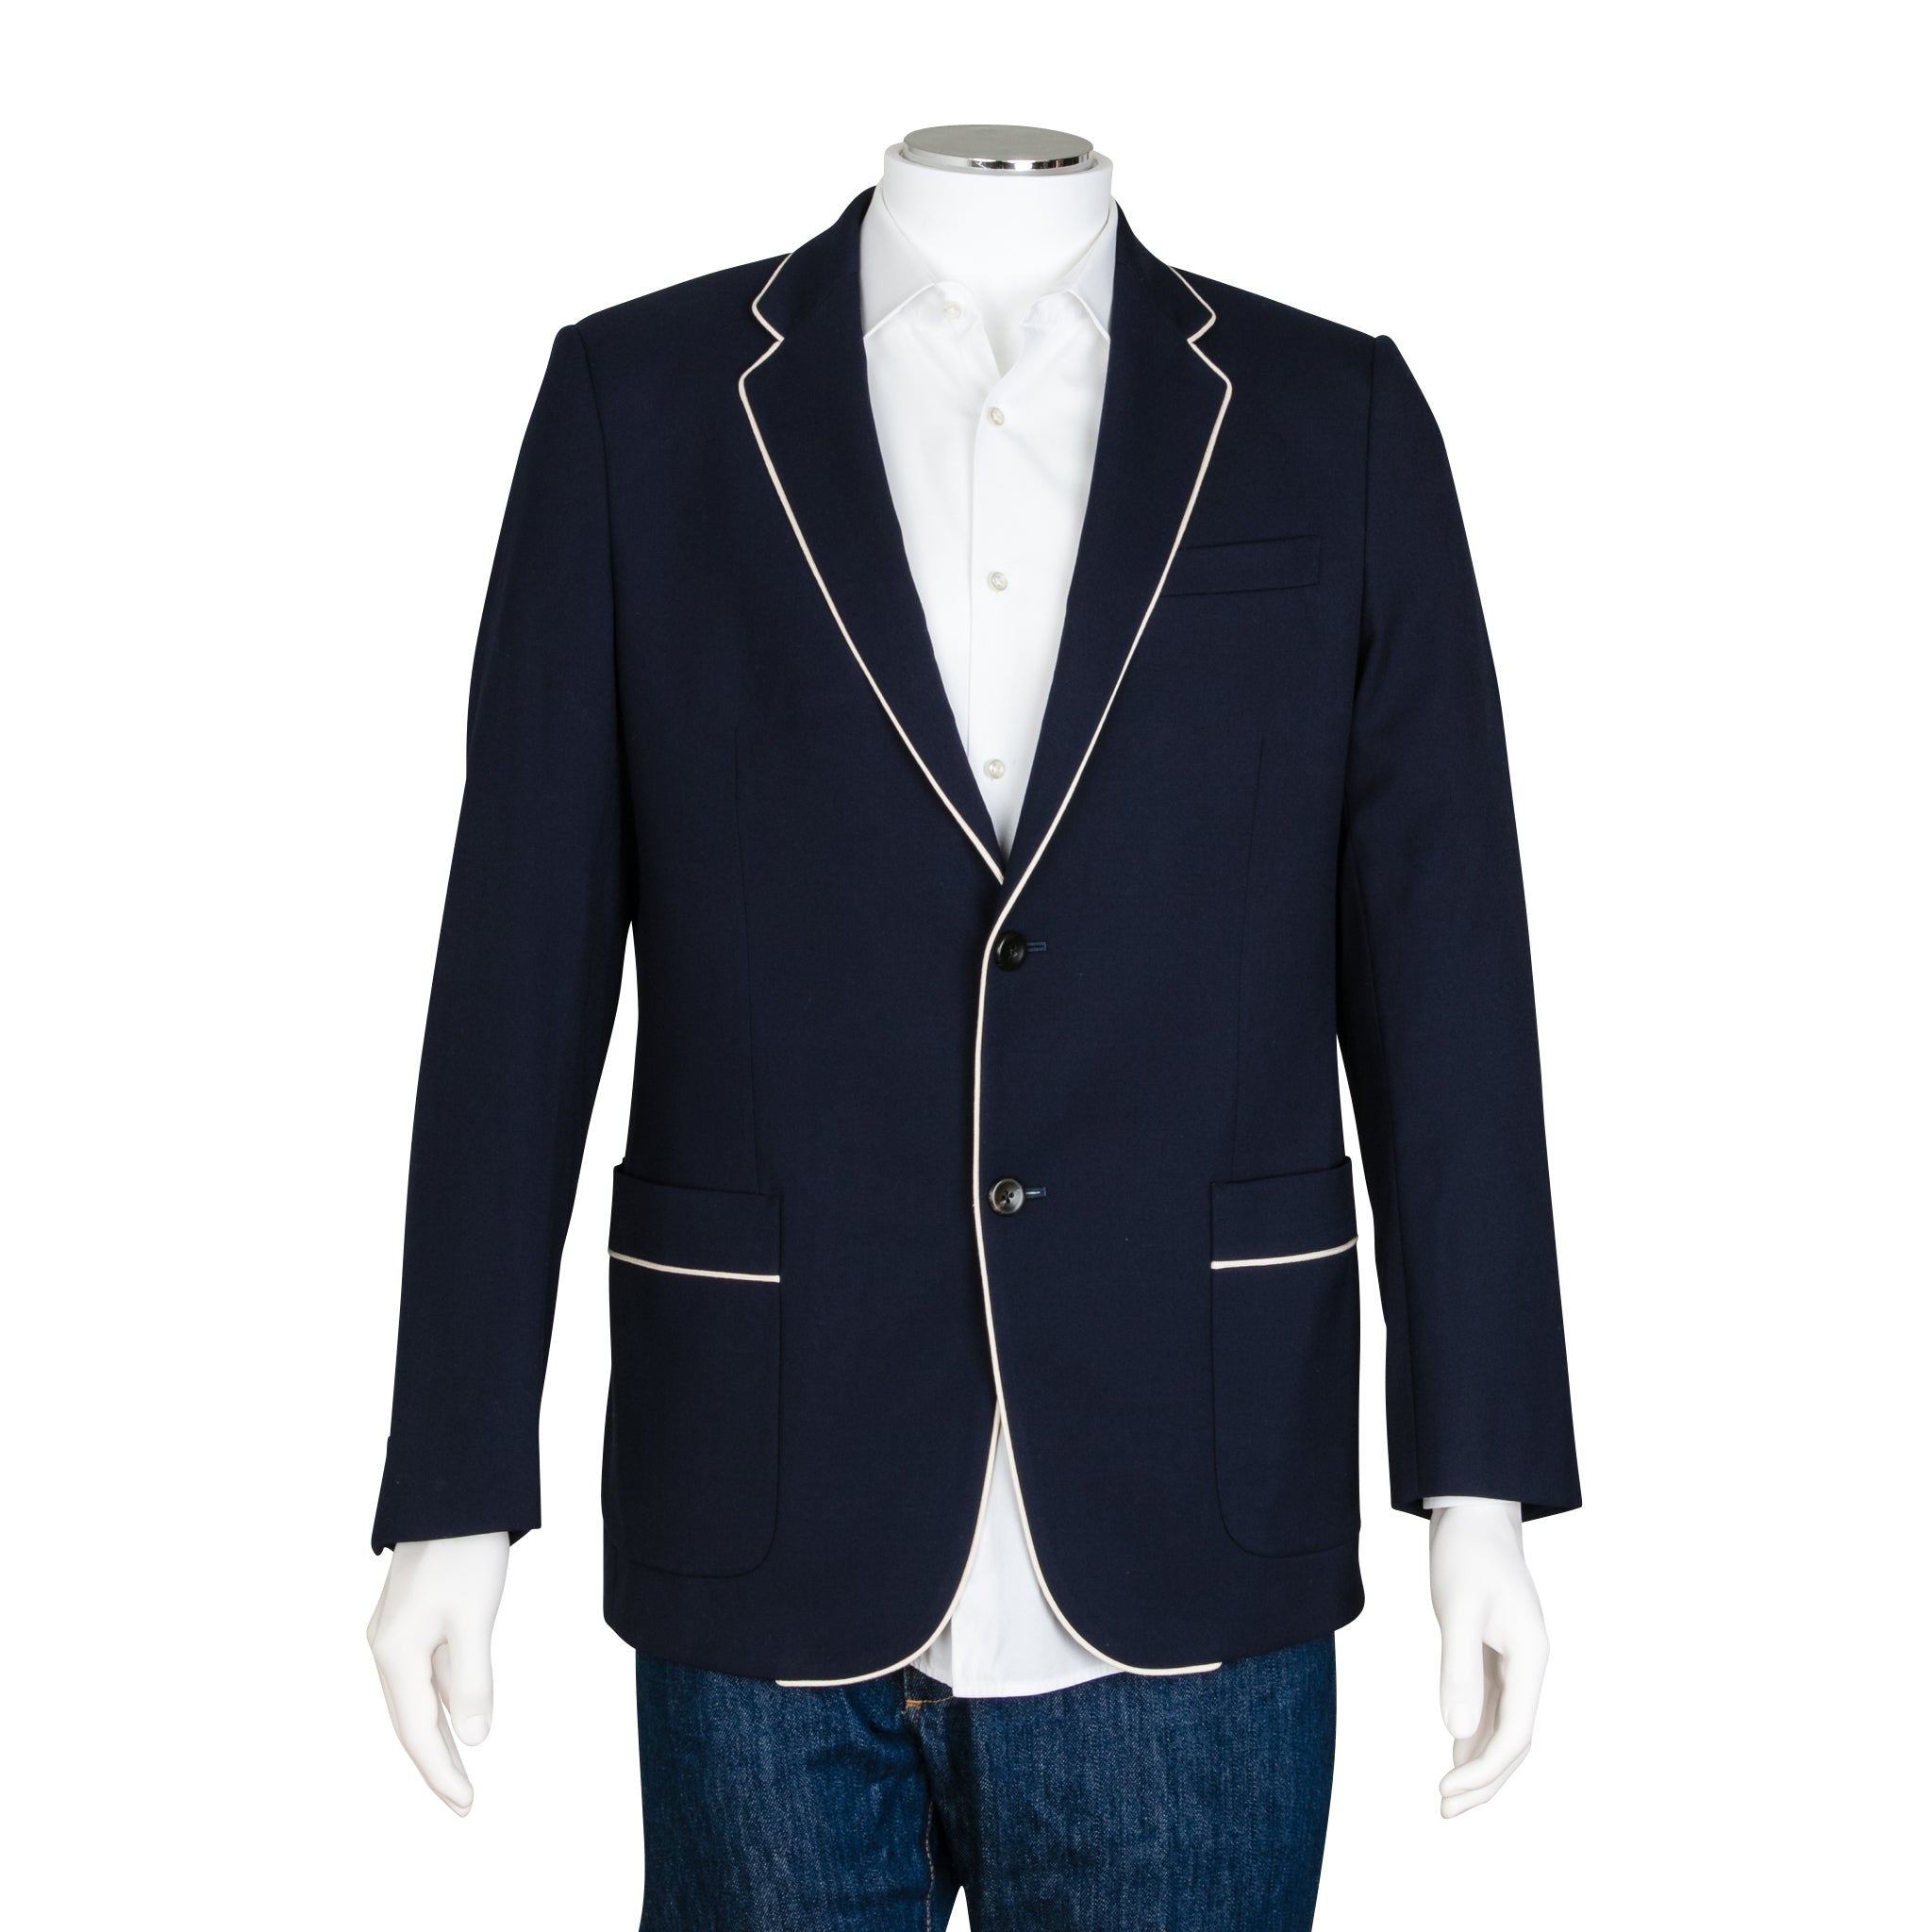 Gucci Navy Blue Blazer Jacket with 